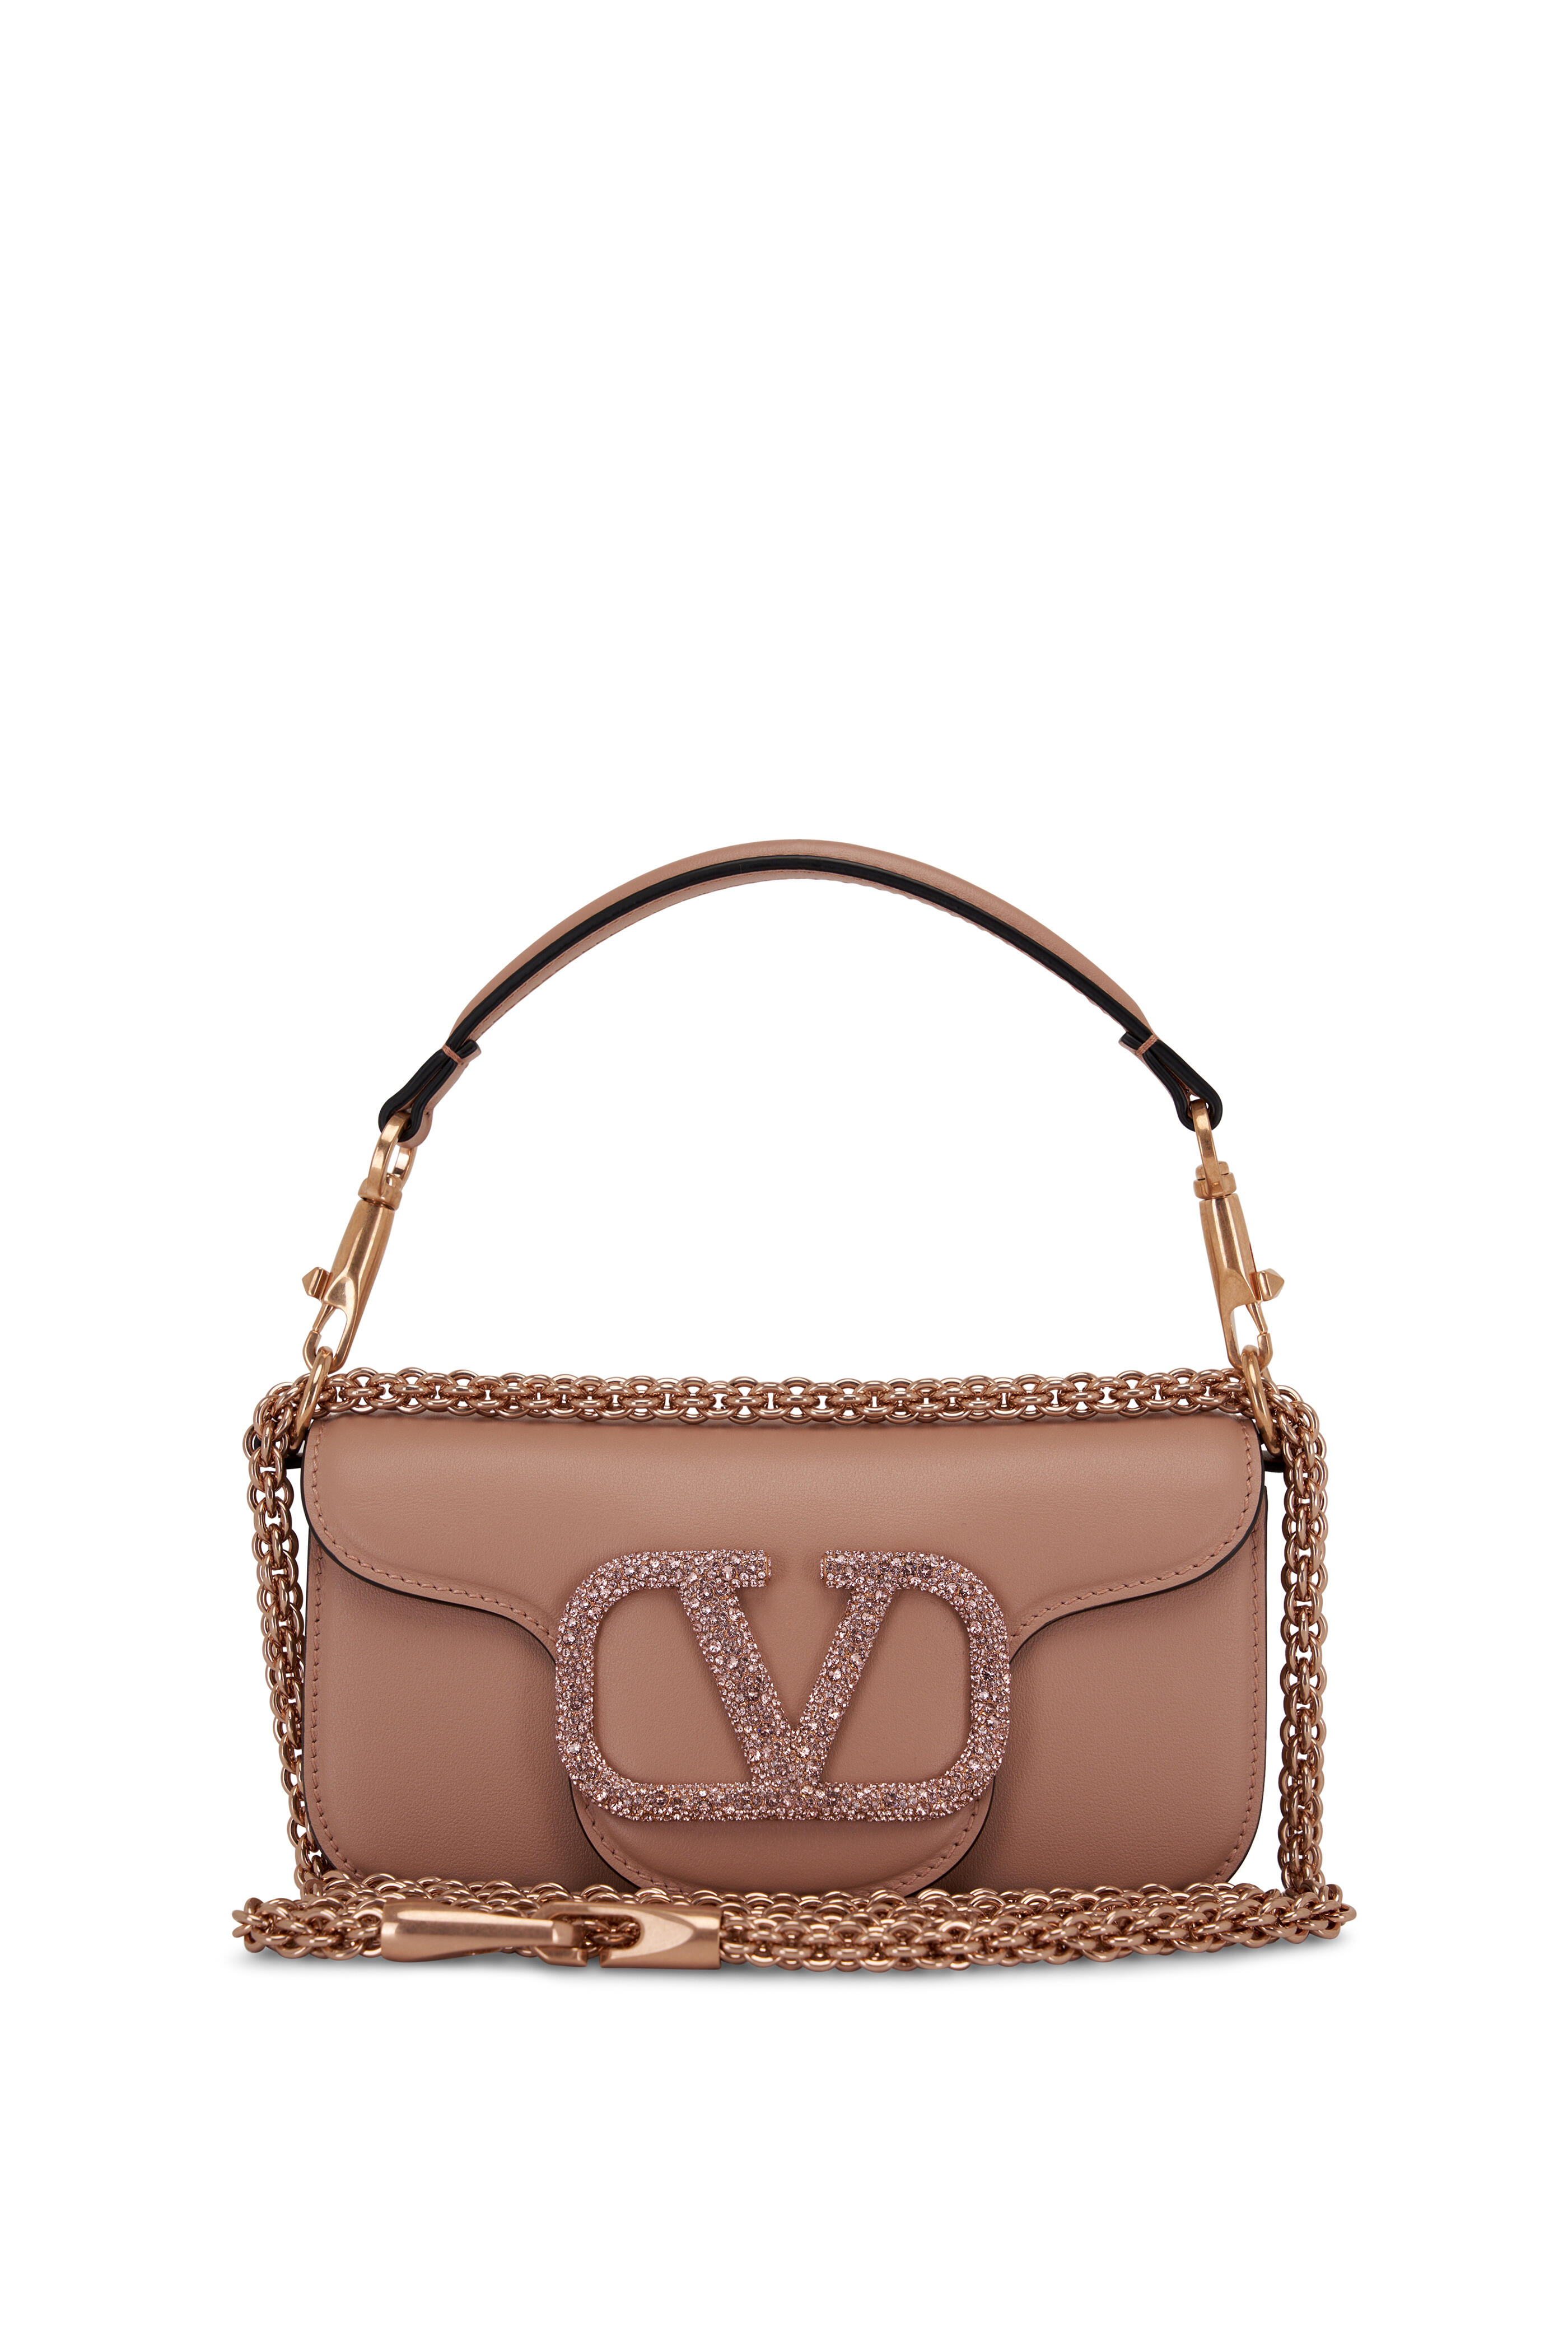 Valentino Garavani Small VLogo Type Shoulder Bag - Farfetch